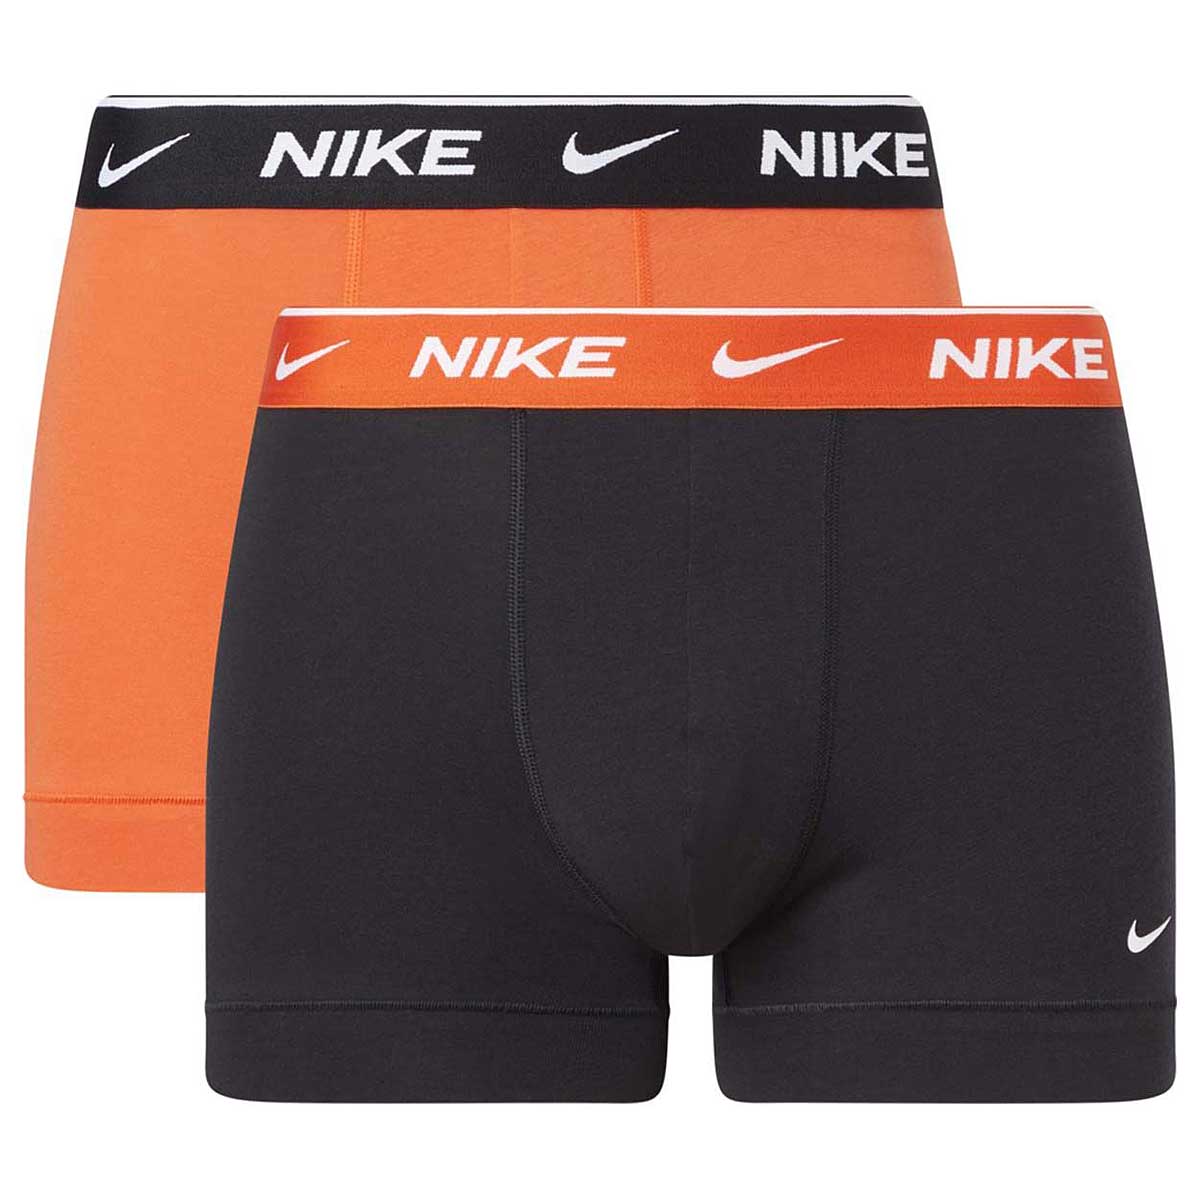 Nike Trunk 2Pk, Team Orange